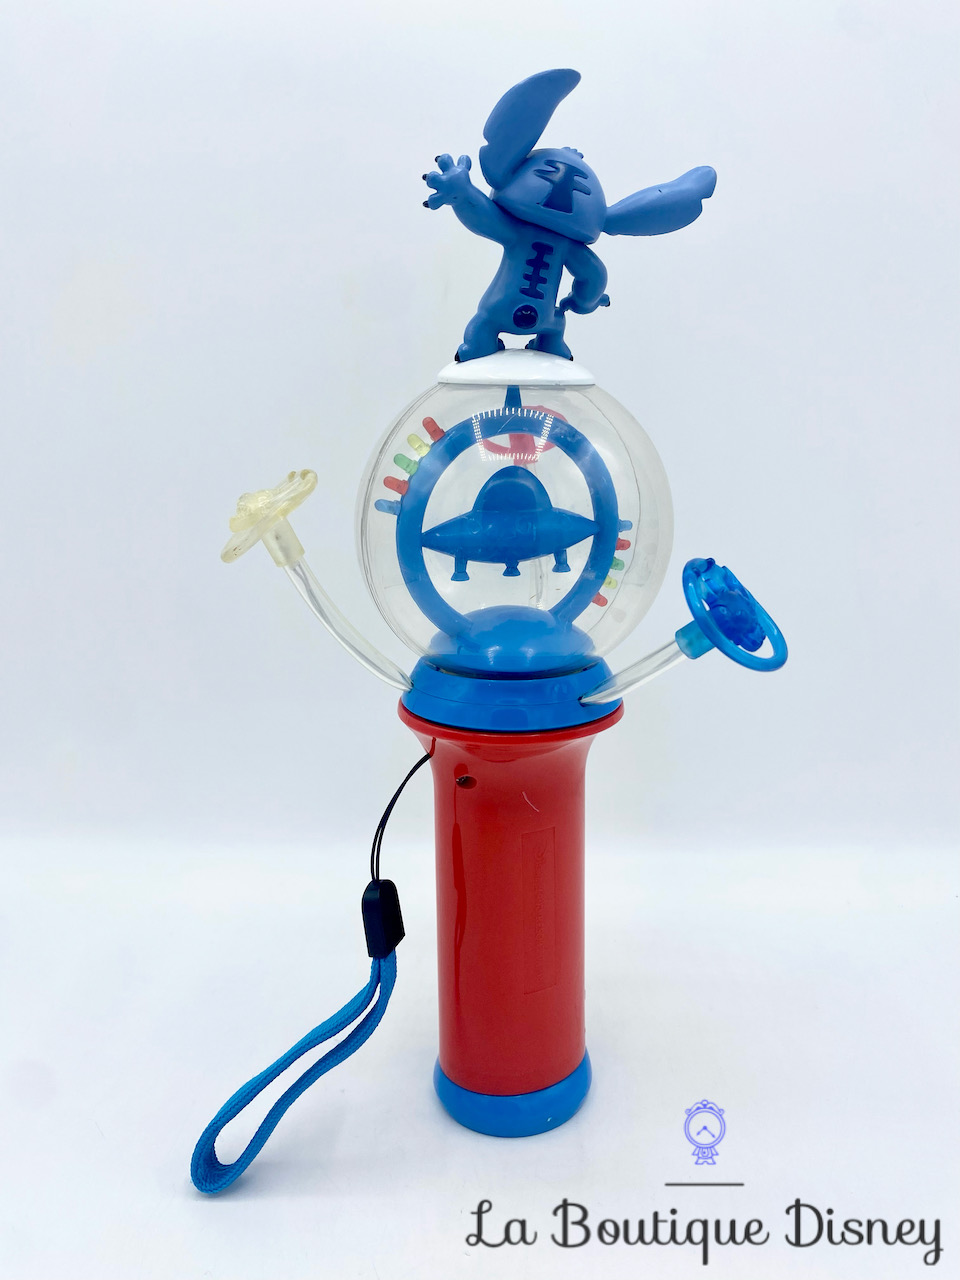 JOUET - TOY - Tokyo Disney - Stitch - Jouet lumineux tournant - Light turn  toy EUR 21,99 - PicClick FR